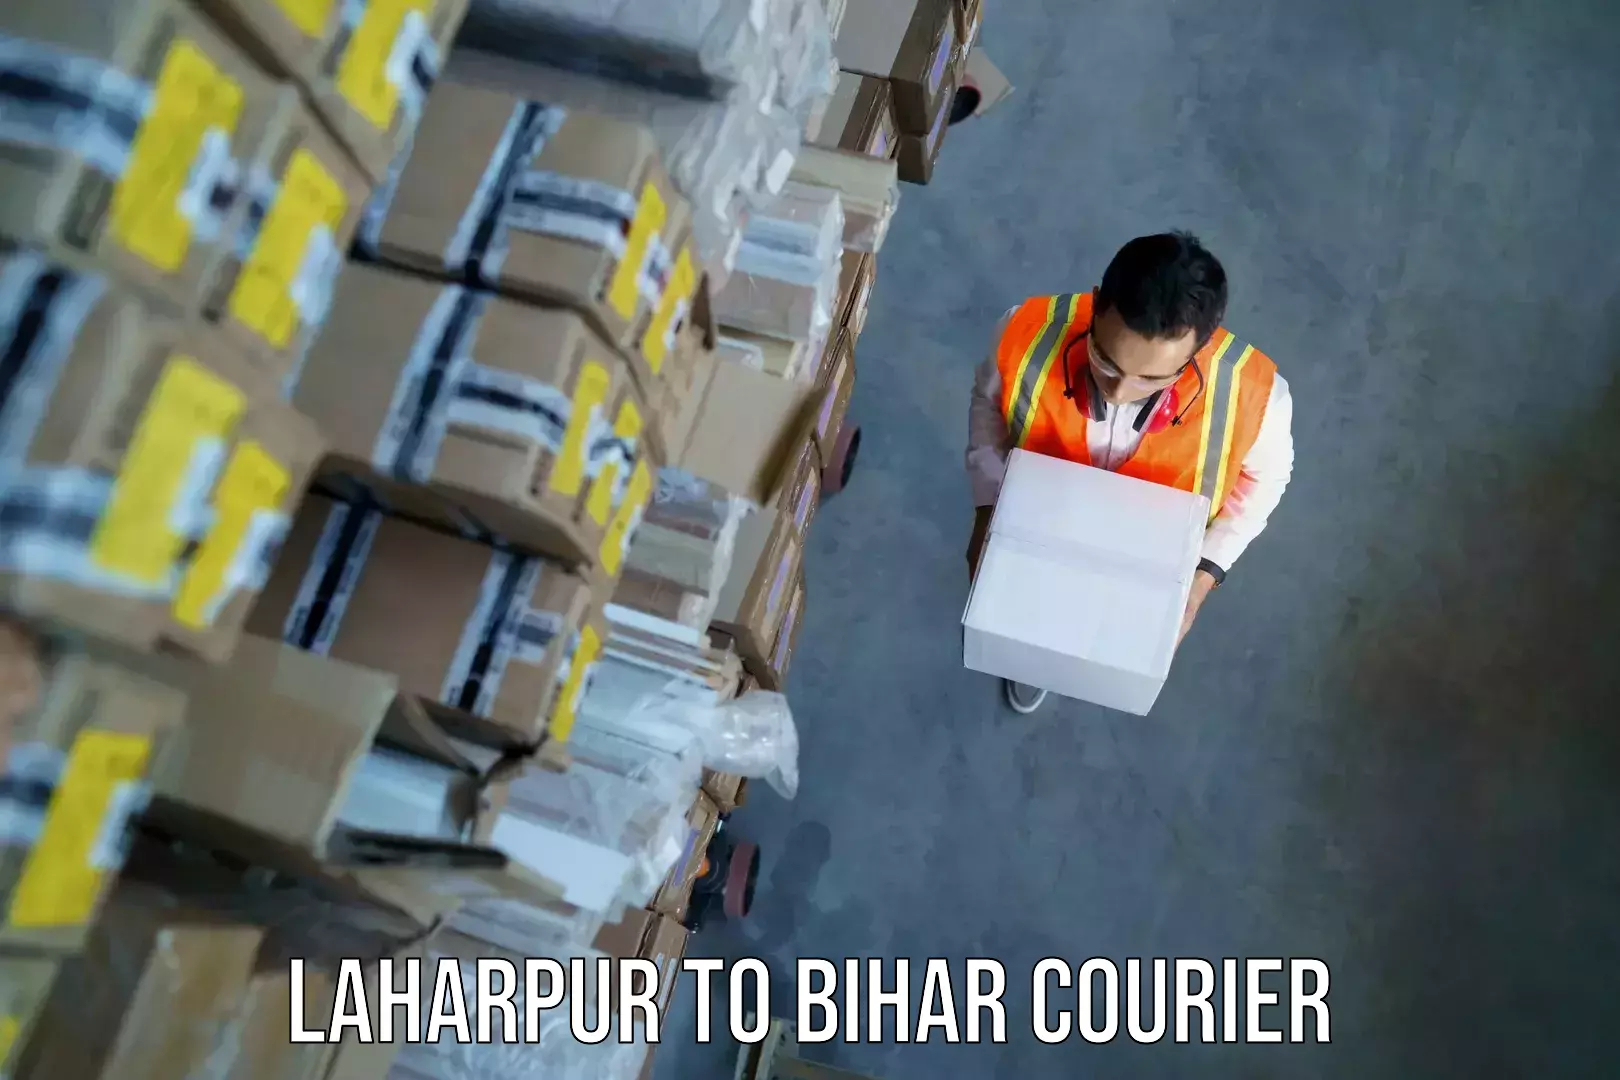 Baggage transport technology Laharpur to Bihar